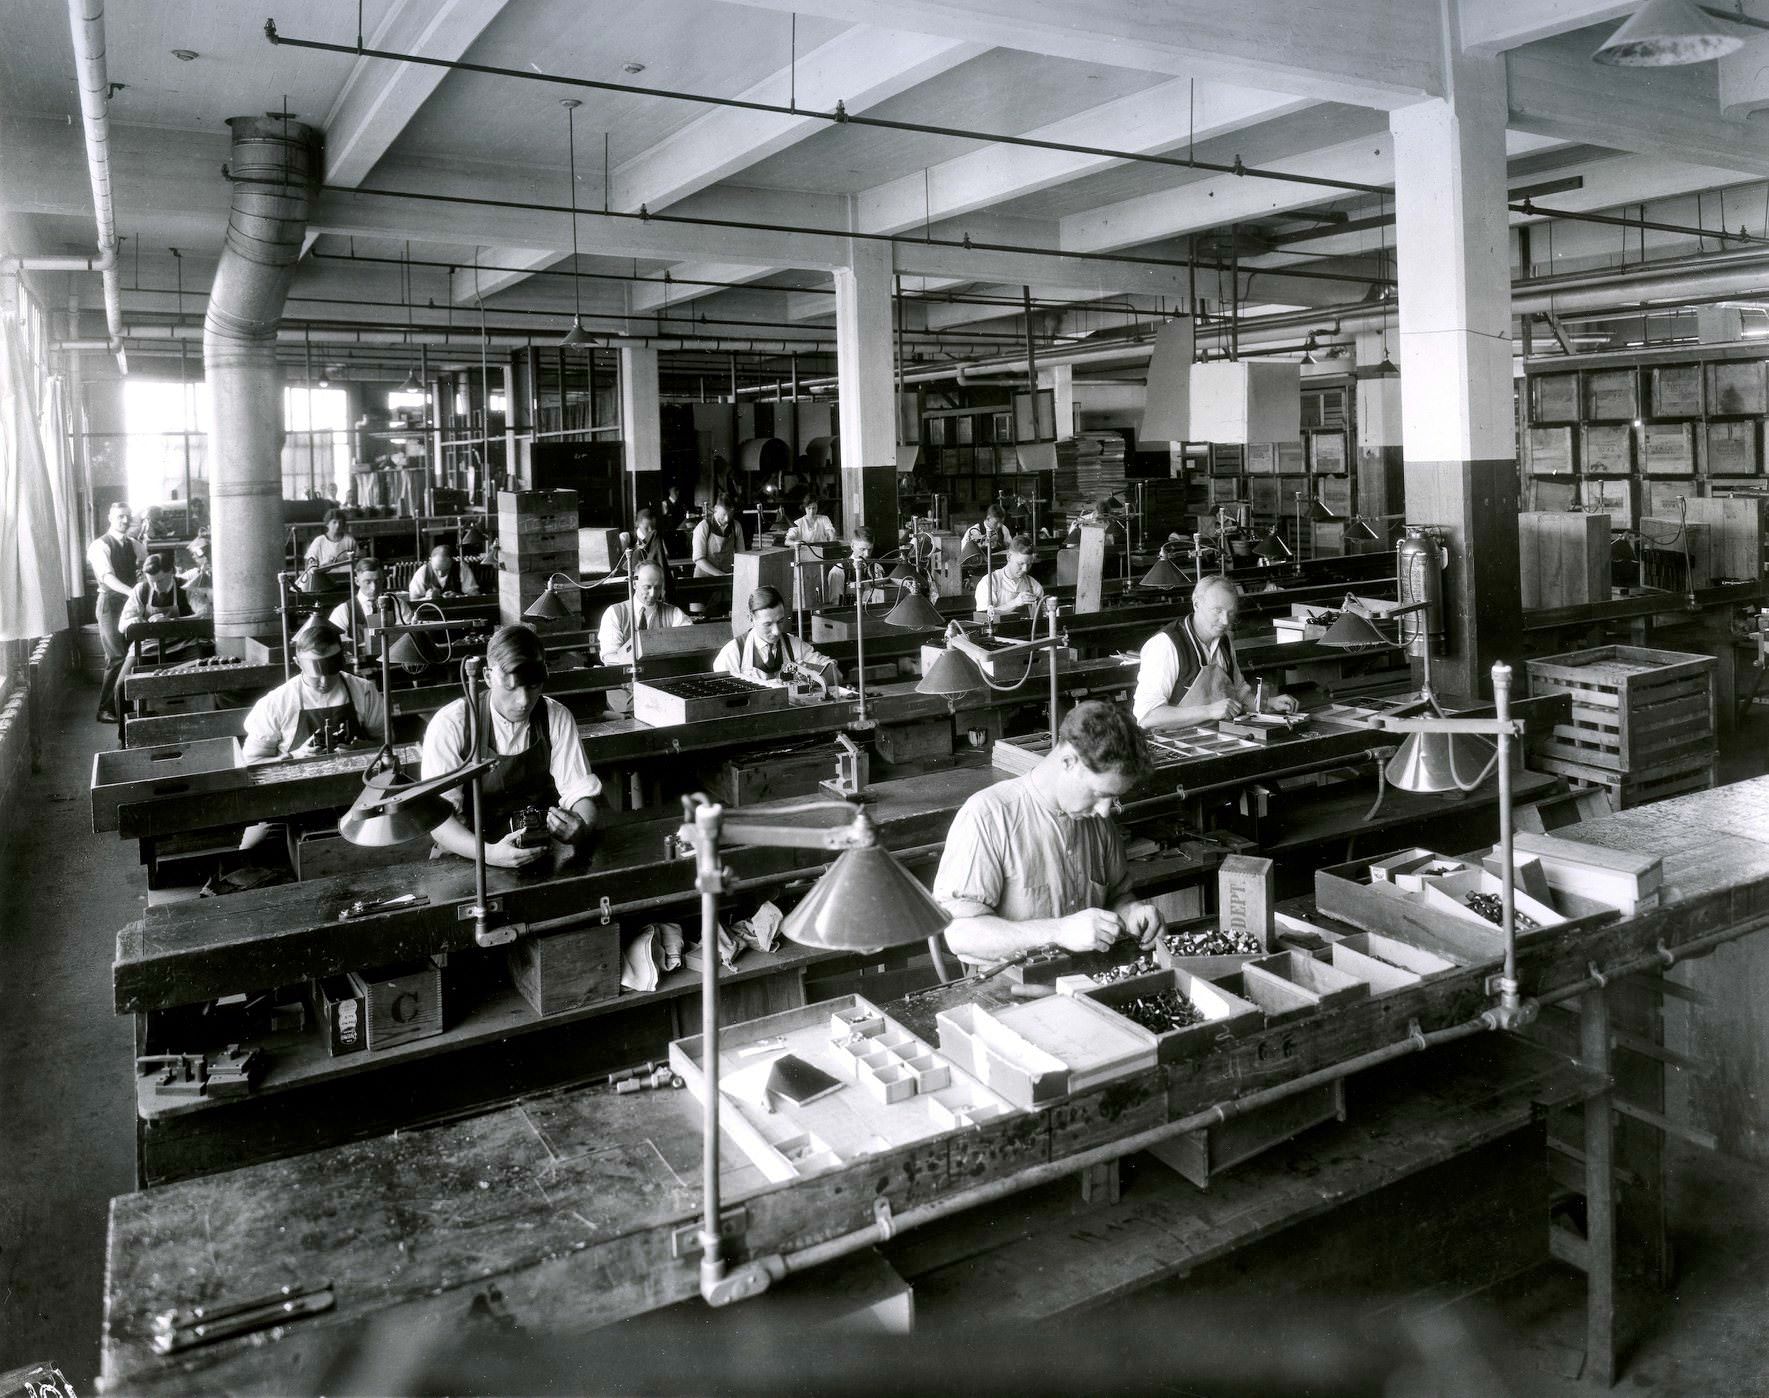 Camera assembly area inside 'Kodak Heights' factory, 1923.